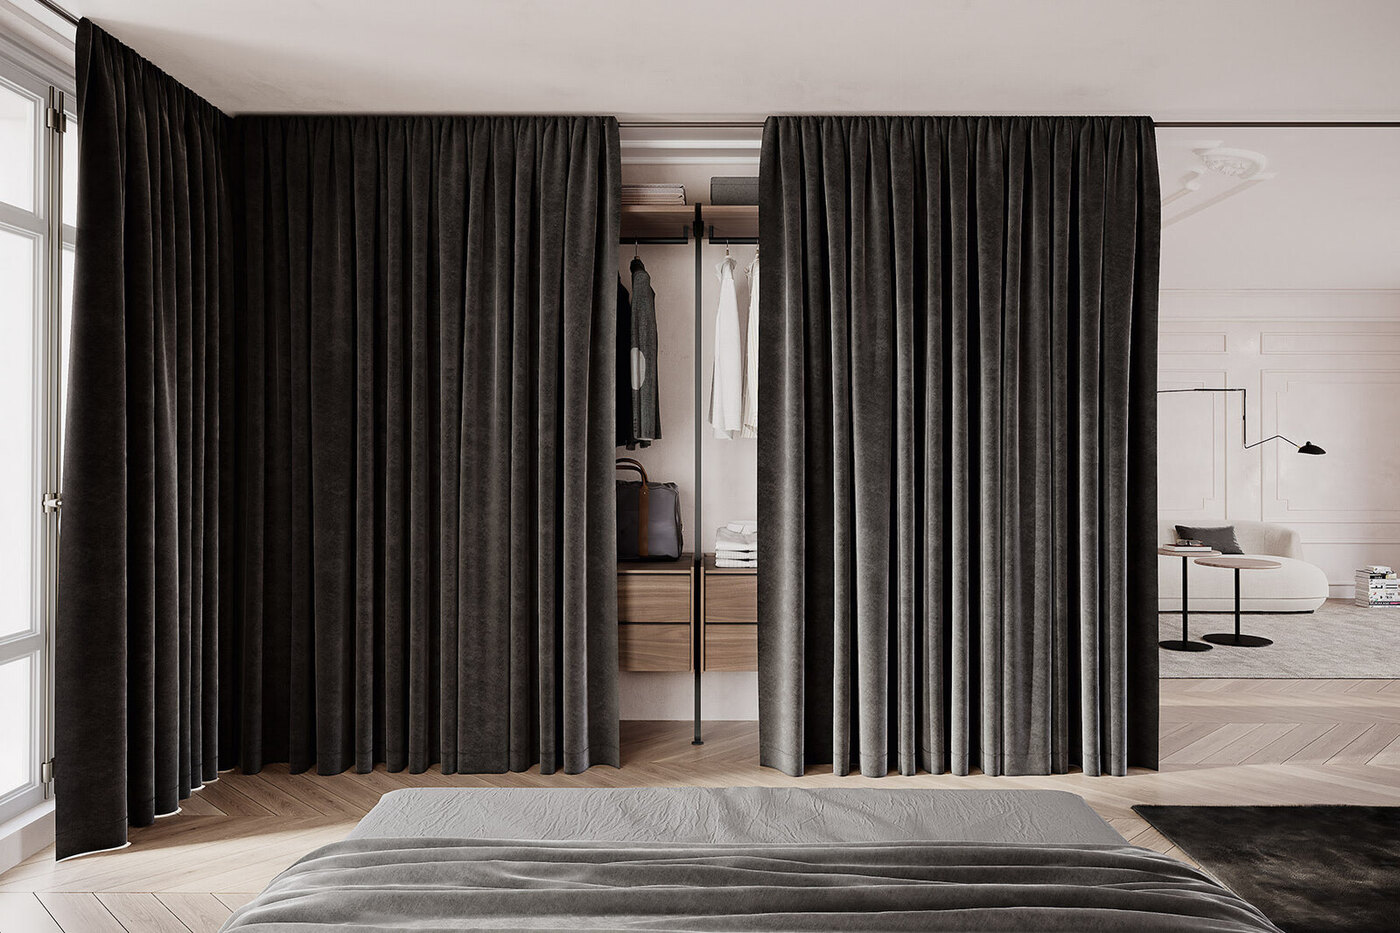 Curtain Closet Ideas: 11 Designs That Add Elegant Texture To A Closet Space